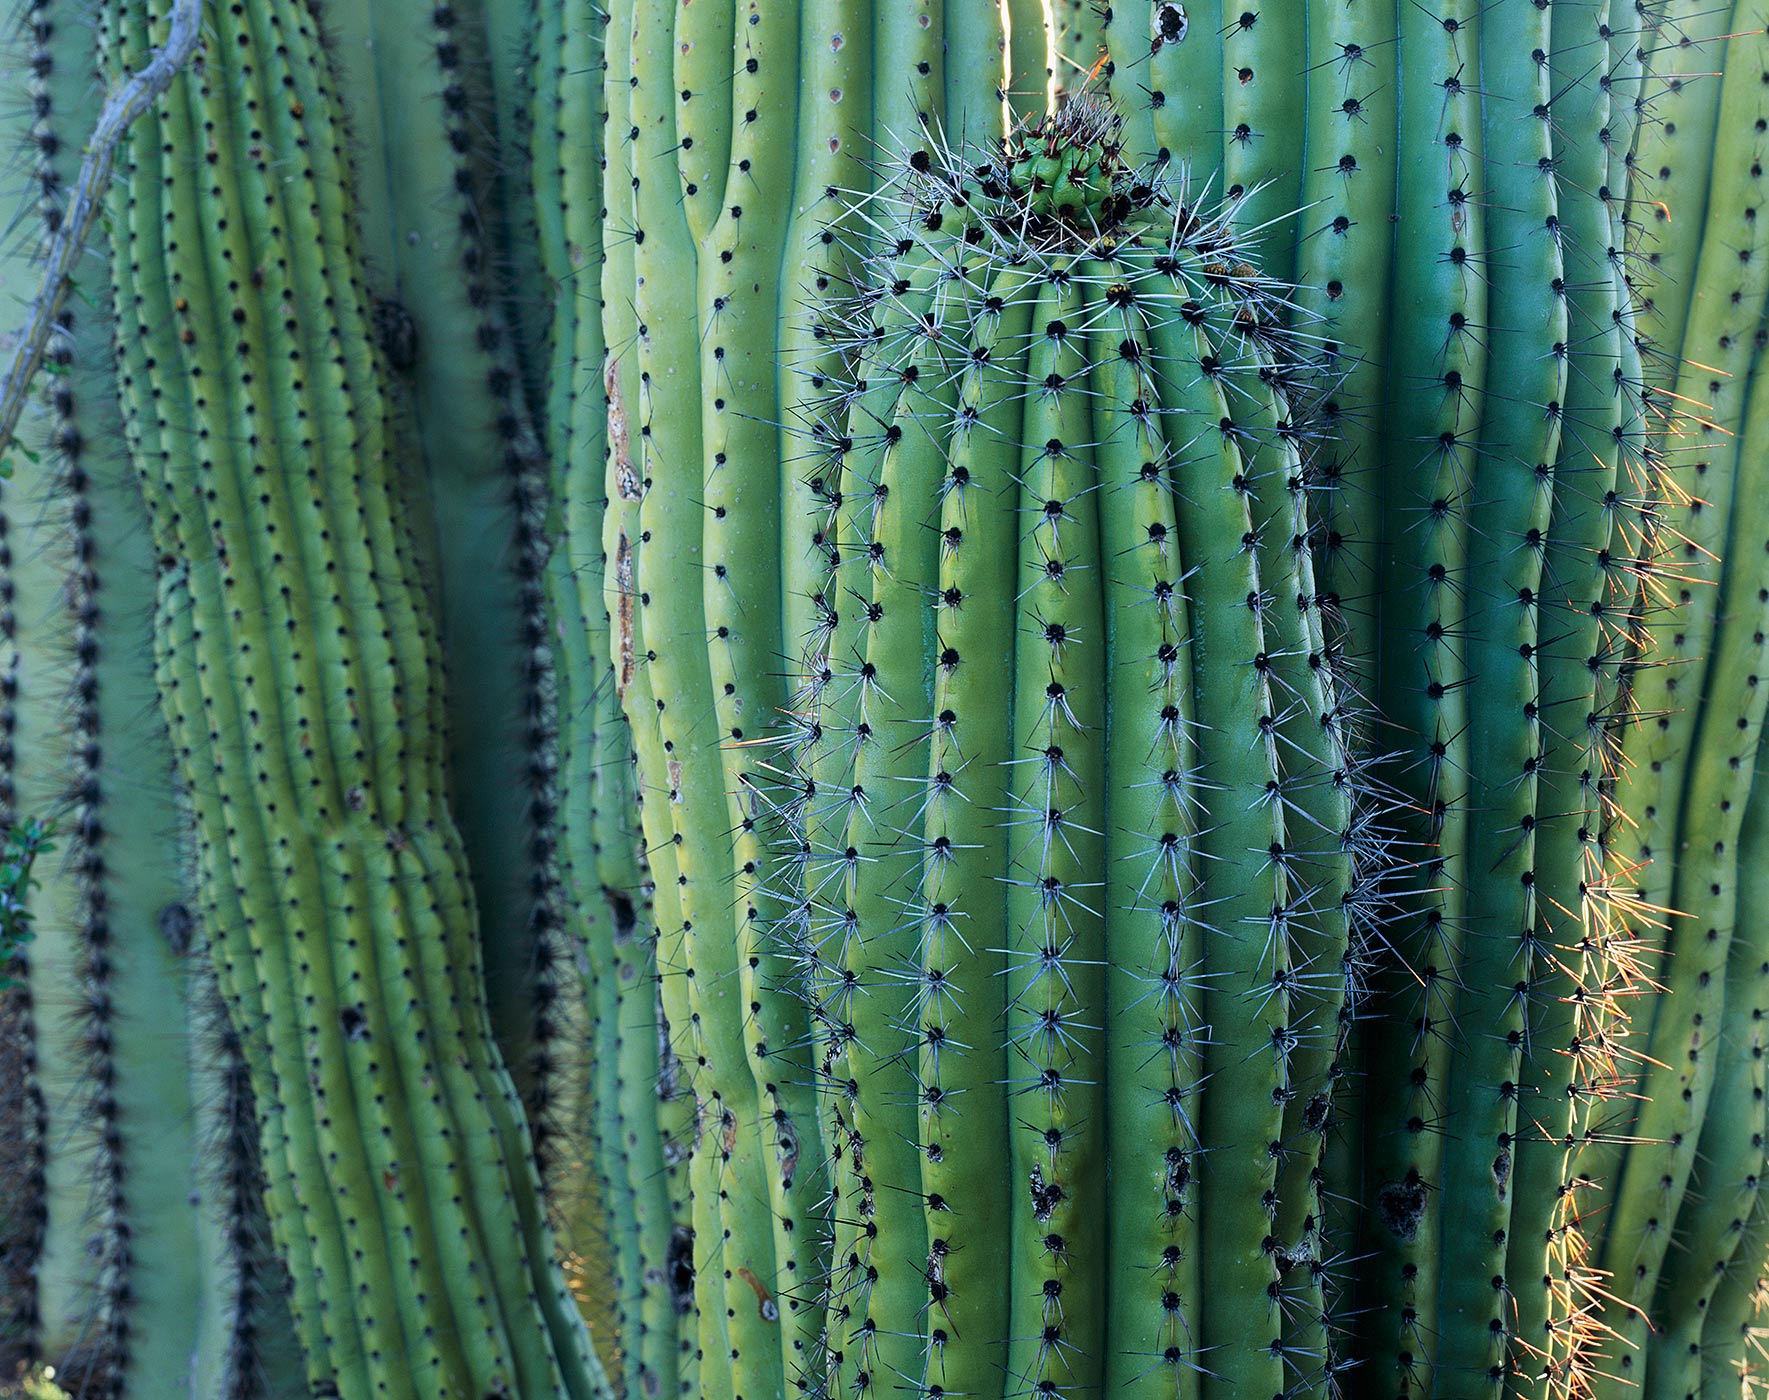 601 Cacti, Organ Pipe Cactus National Monument, Arizona